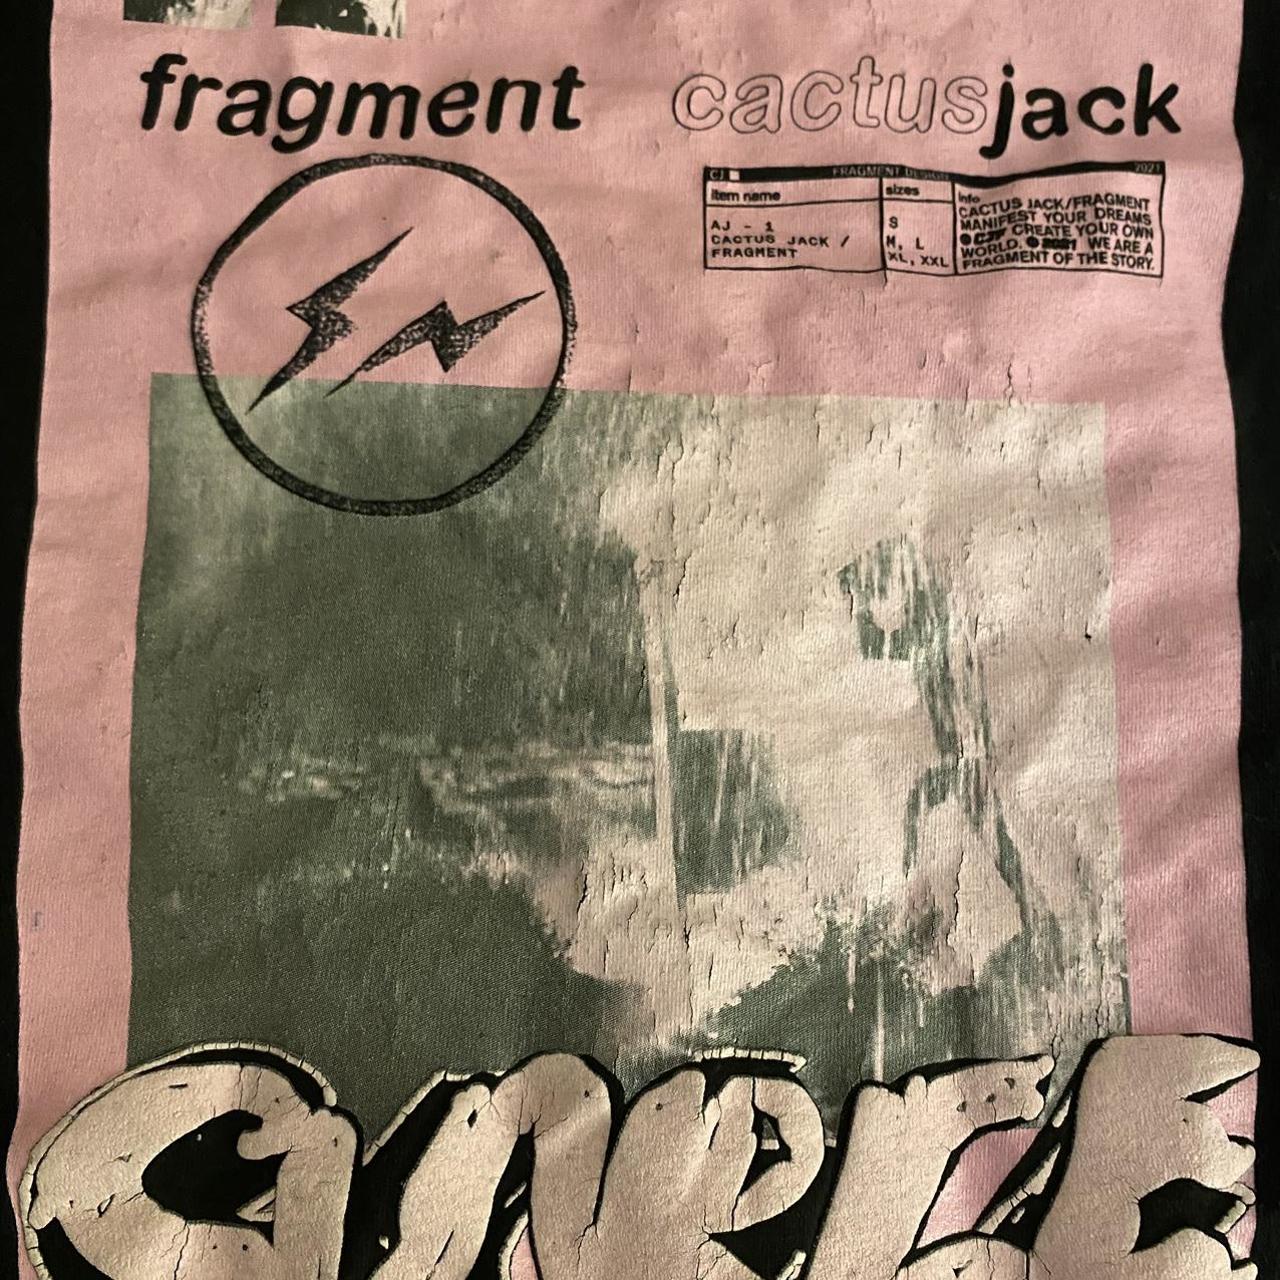 Travis Scott cactus jack 'For fragment manifest - Depop